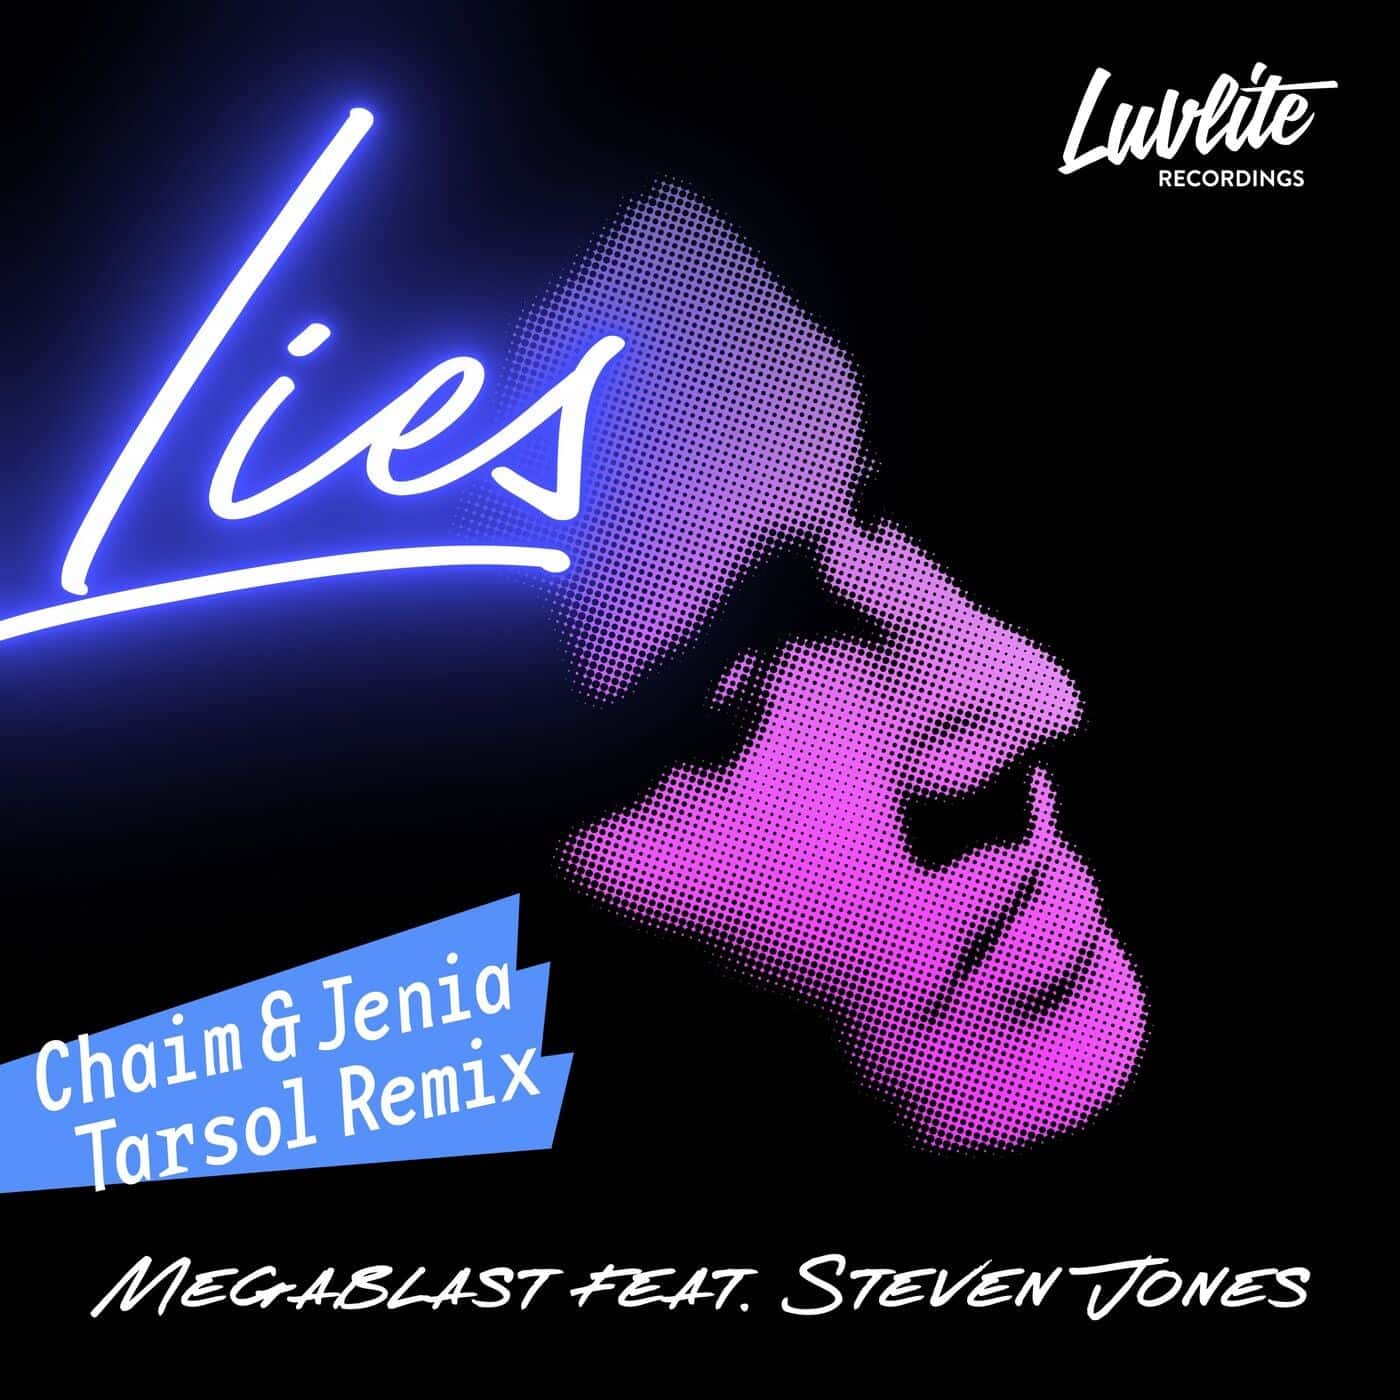 Download Lies (Chaim & Jenia Tarsol Remix) on Electrobuzz